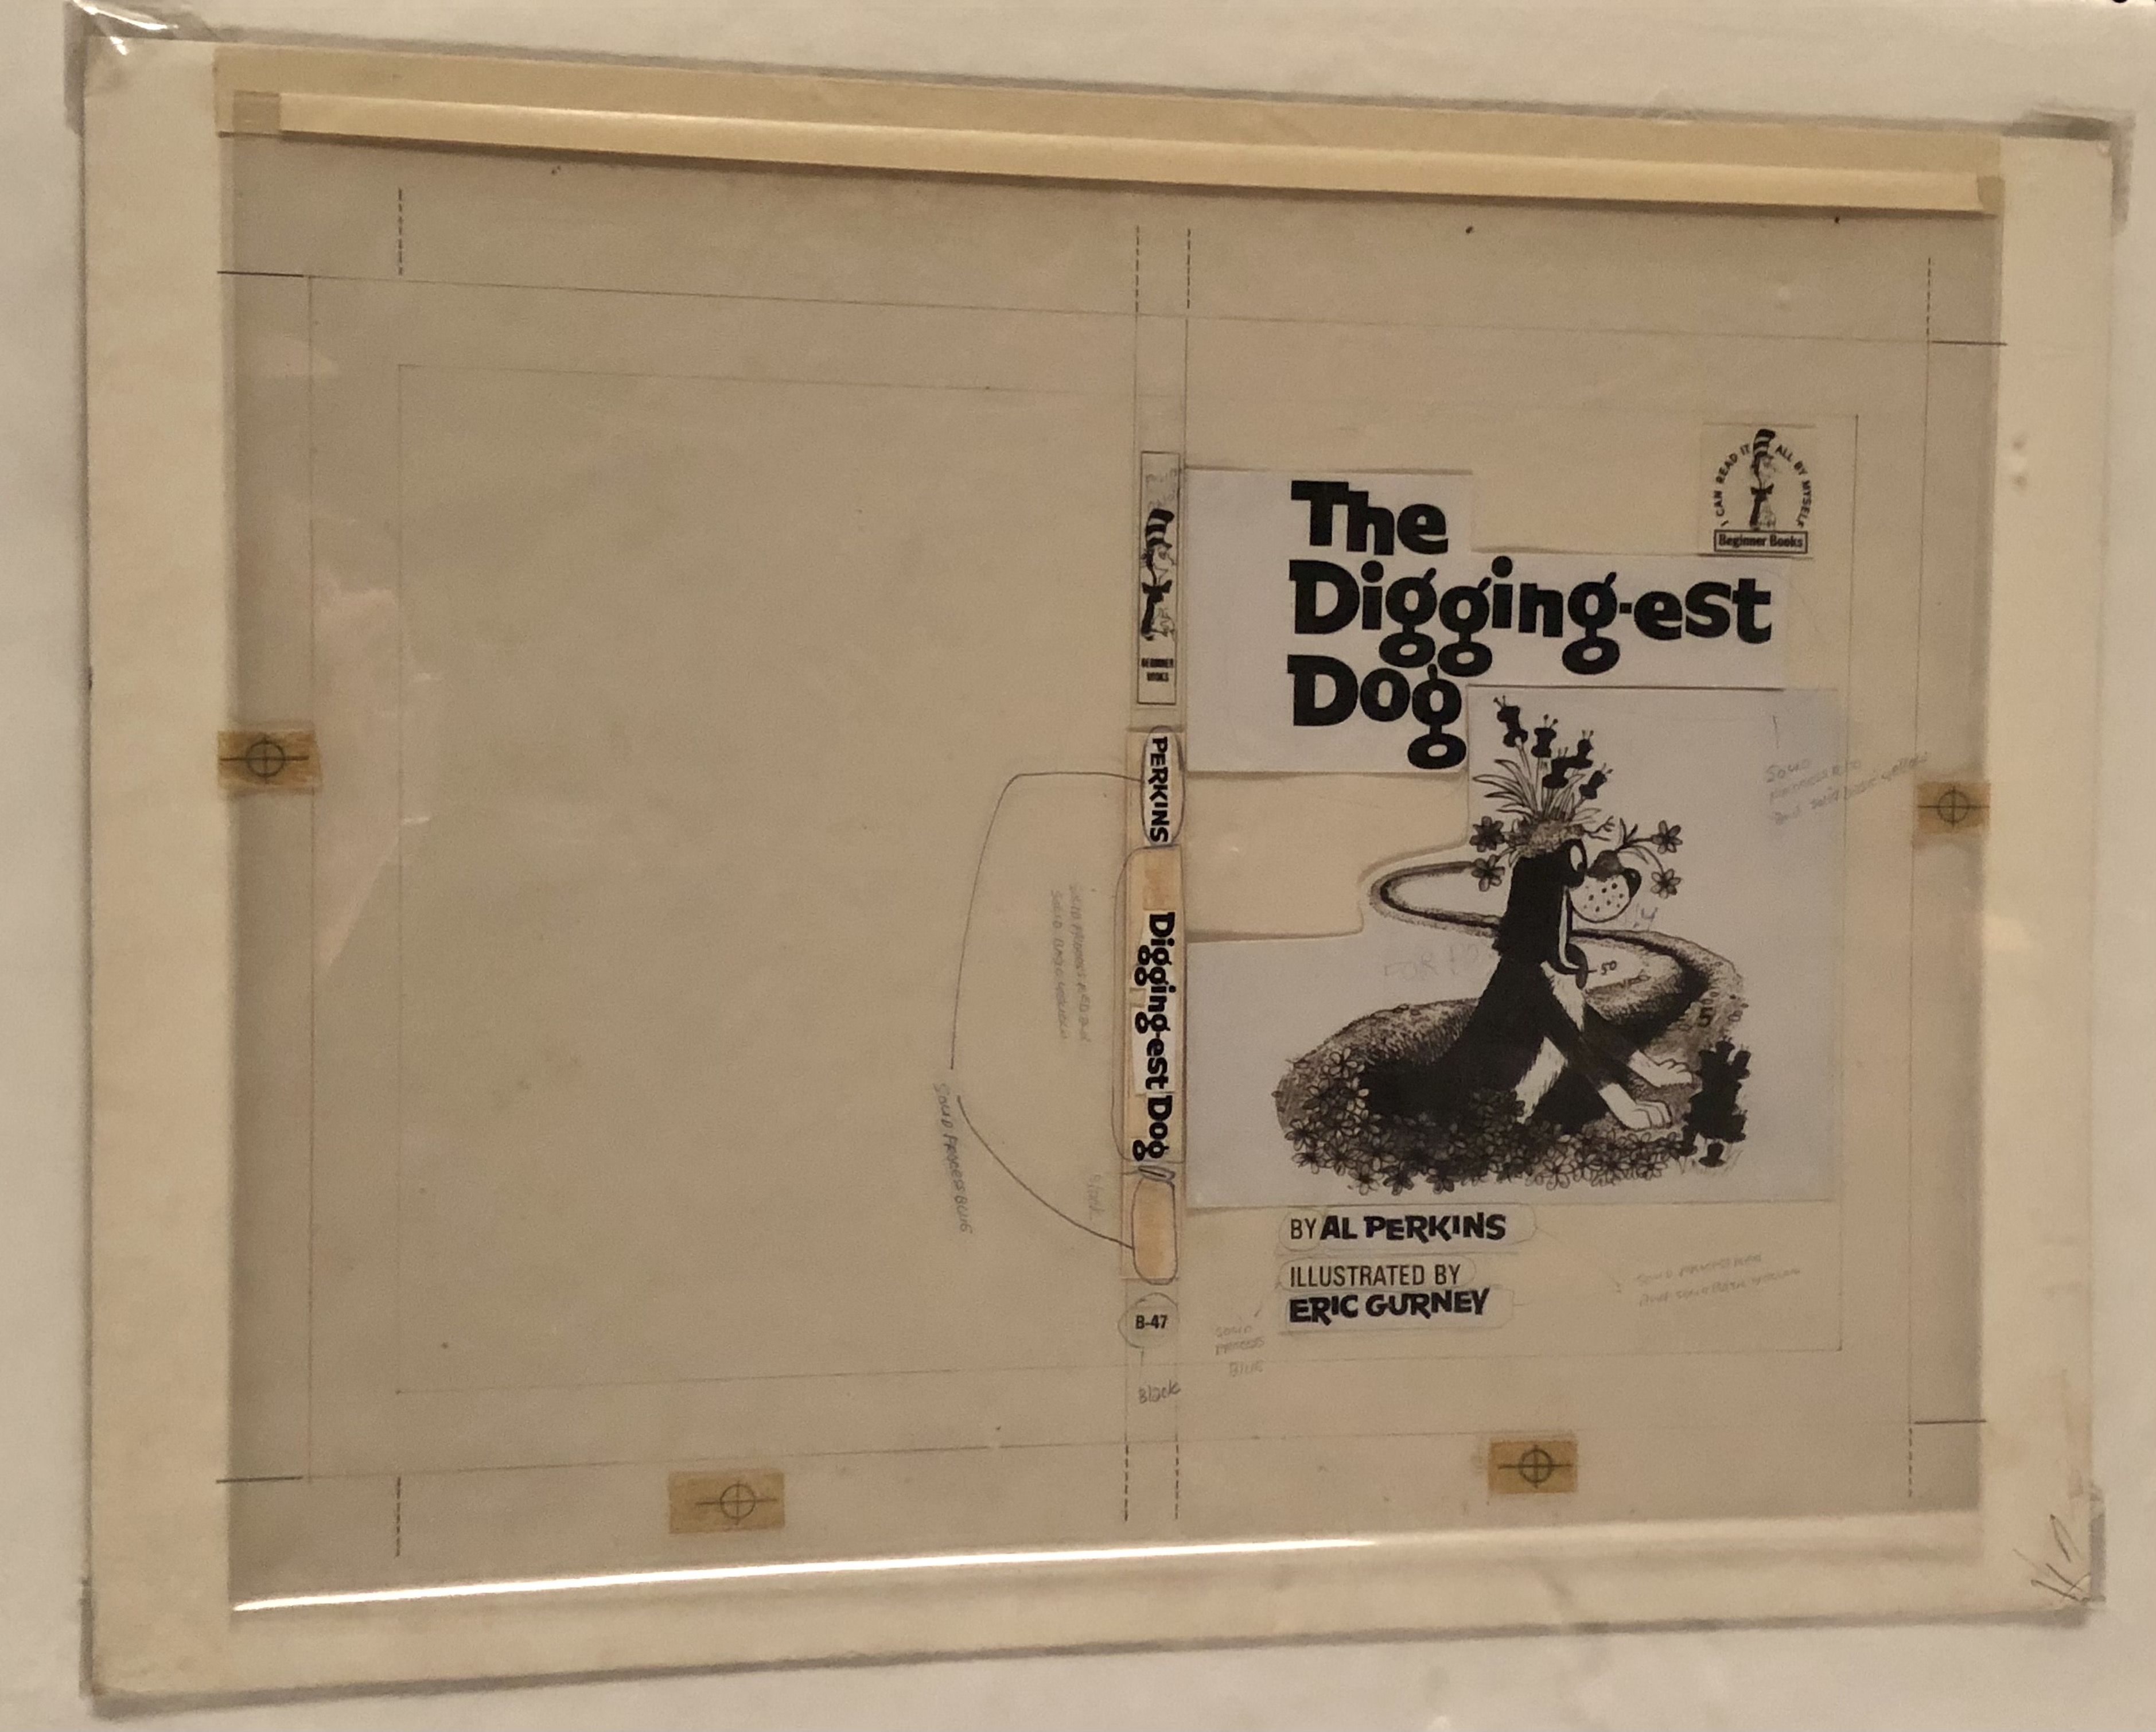 "The Digging-est Dog" jacket mock-up with pastedowns